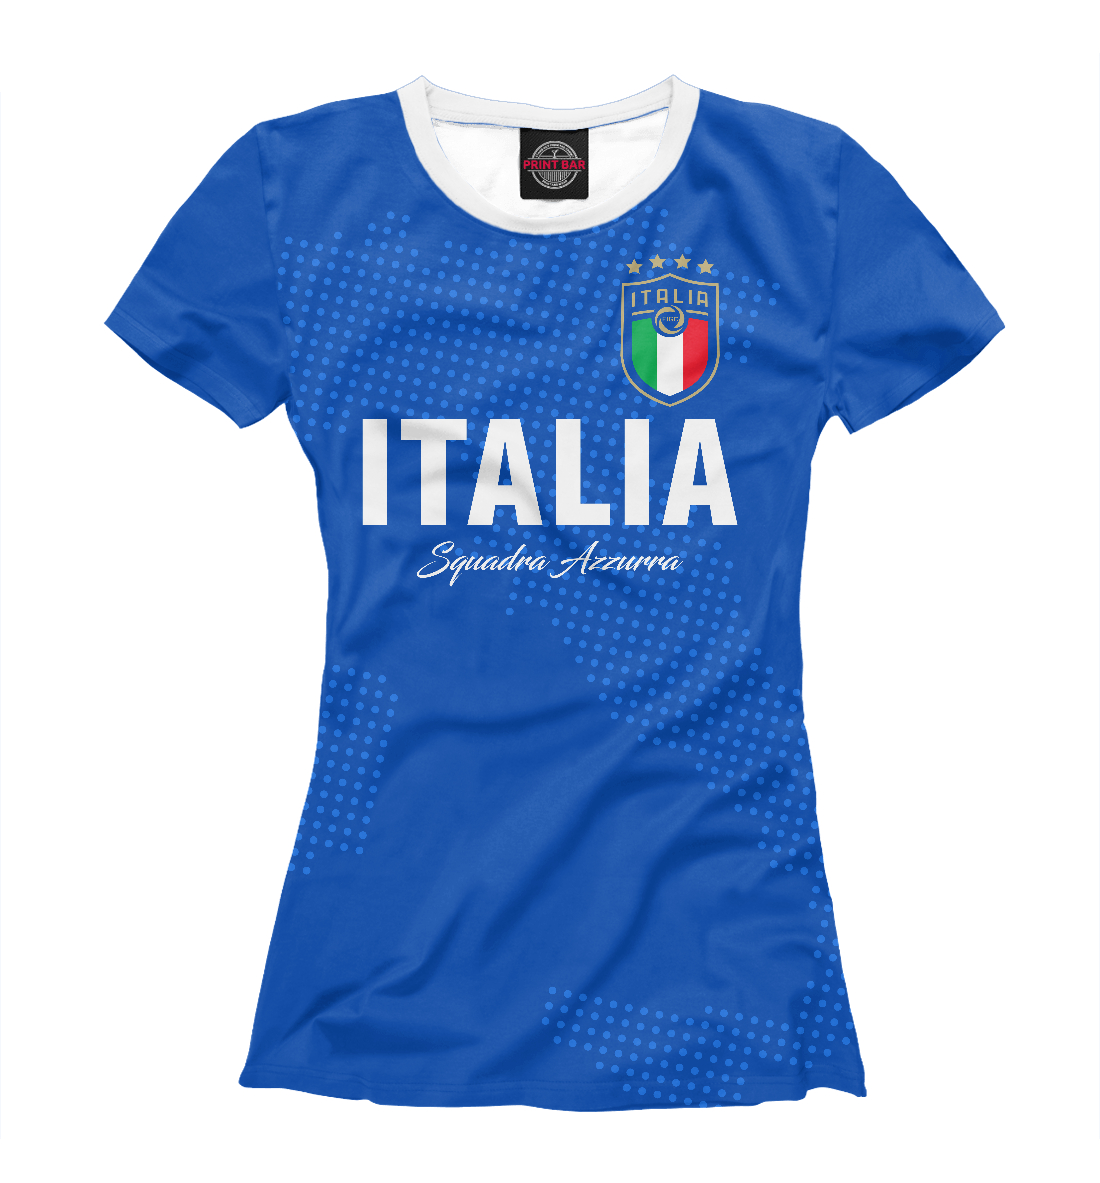 Футболка Италия для девочек, артикул: FNS-186686-fut-1mp